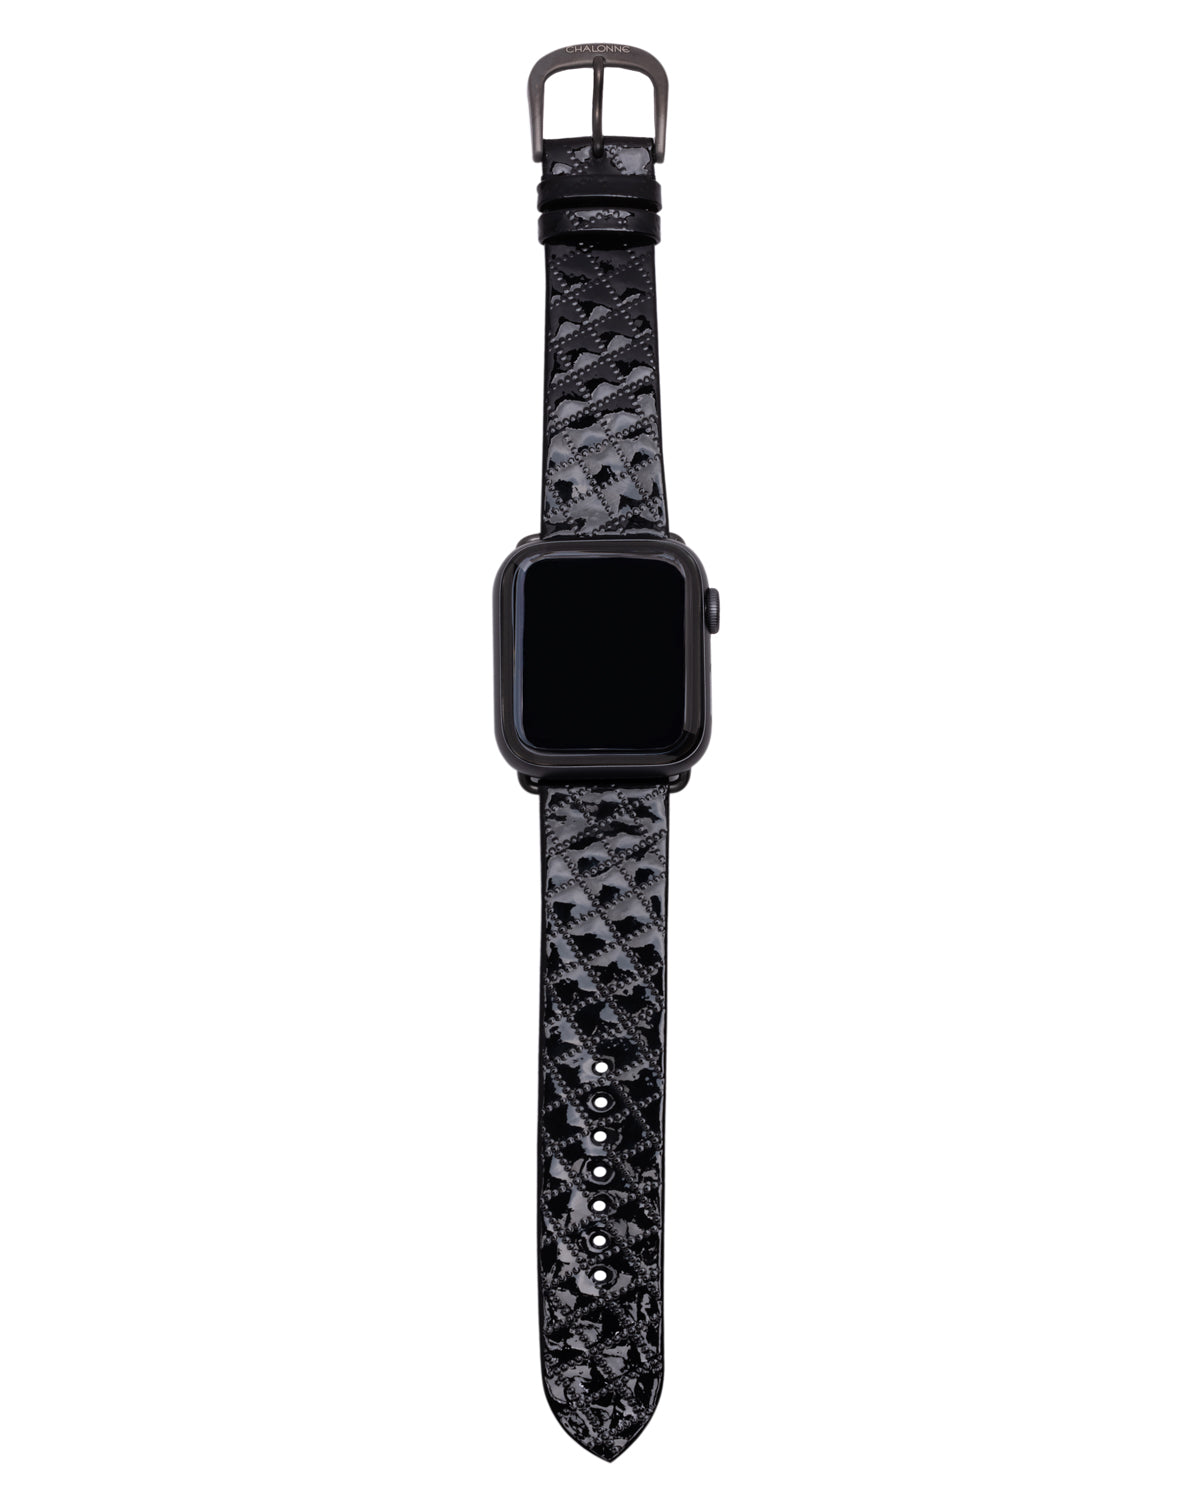 Patent Leather, Grid Pattern, Apple Watch Band - Chalonne